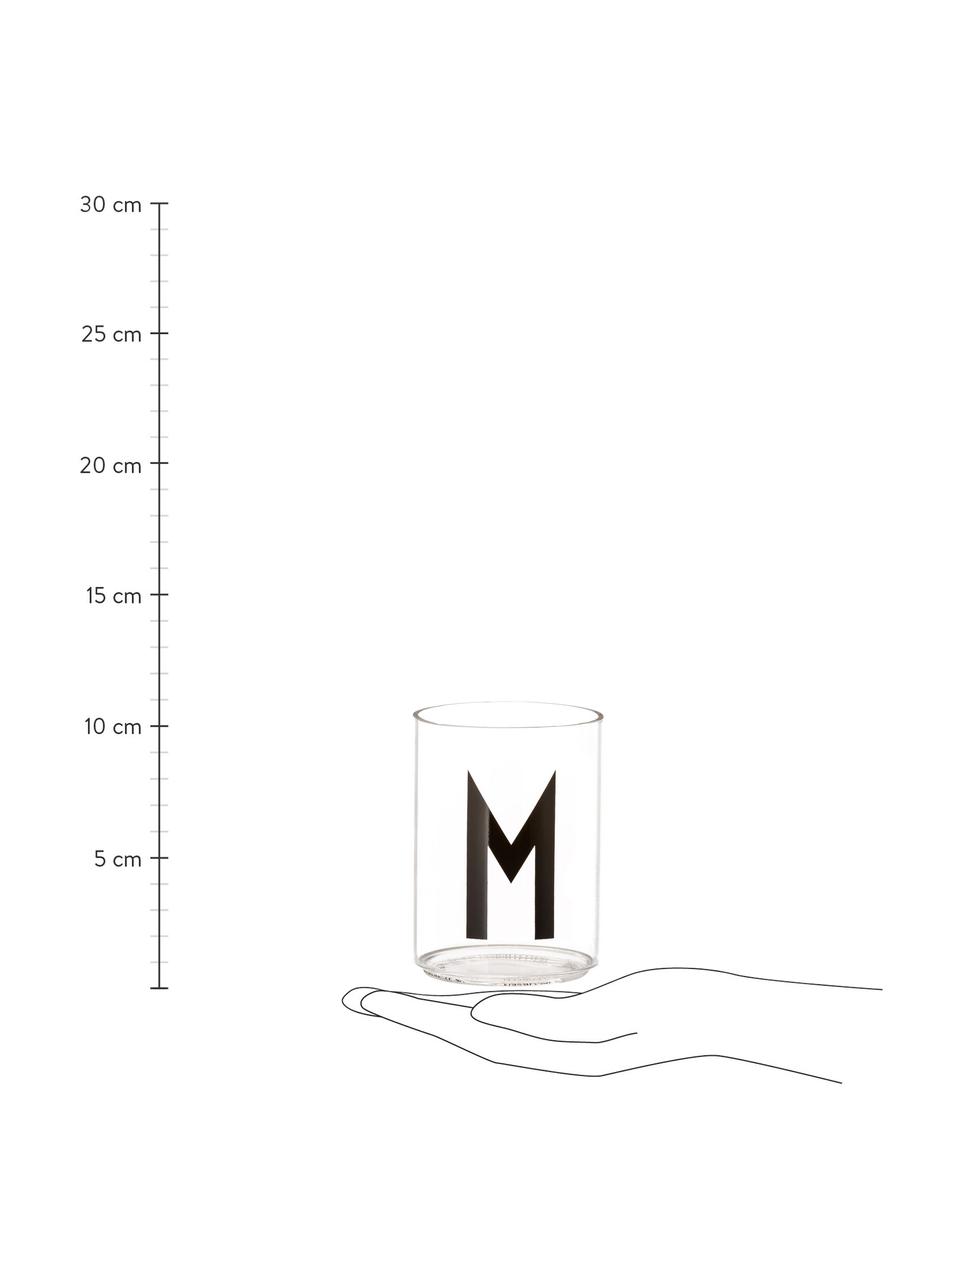 Design waterglas Personal met letters (varianten van A tot Z), Borosilicaatglas, Transparant, zwart, Waterglas A, 300 ml